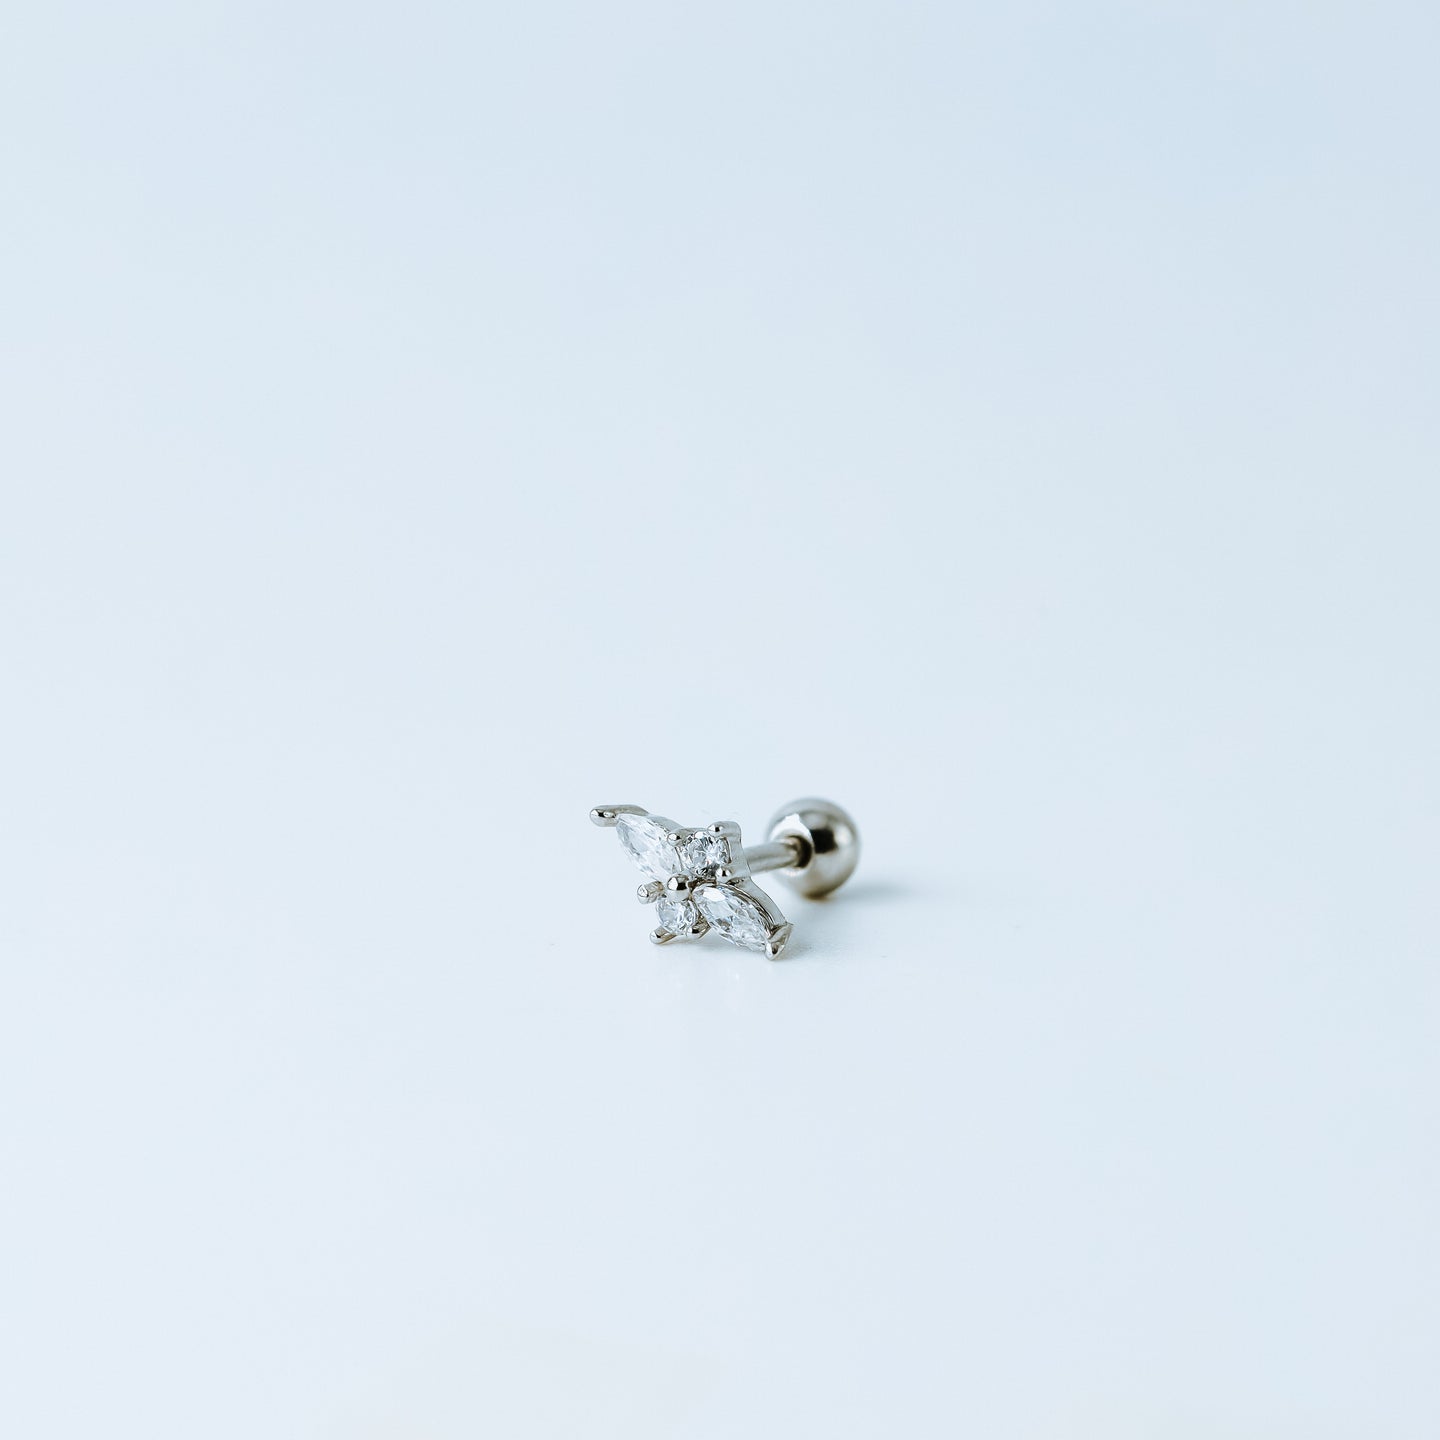 Dainty Gold Tiny Flower Earrings, Four Petals Flower Stud, Tiny Sparkly CZ Studs, Cartilage Earrings, Minimalist Earrings, Piercing Earrings